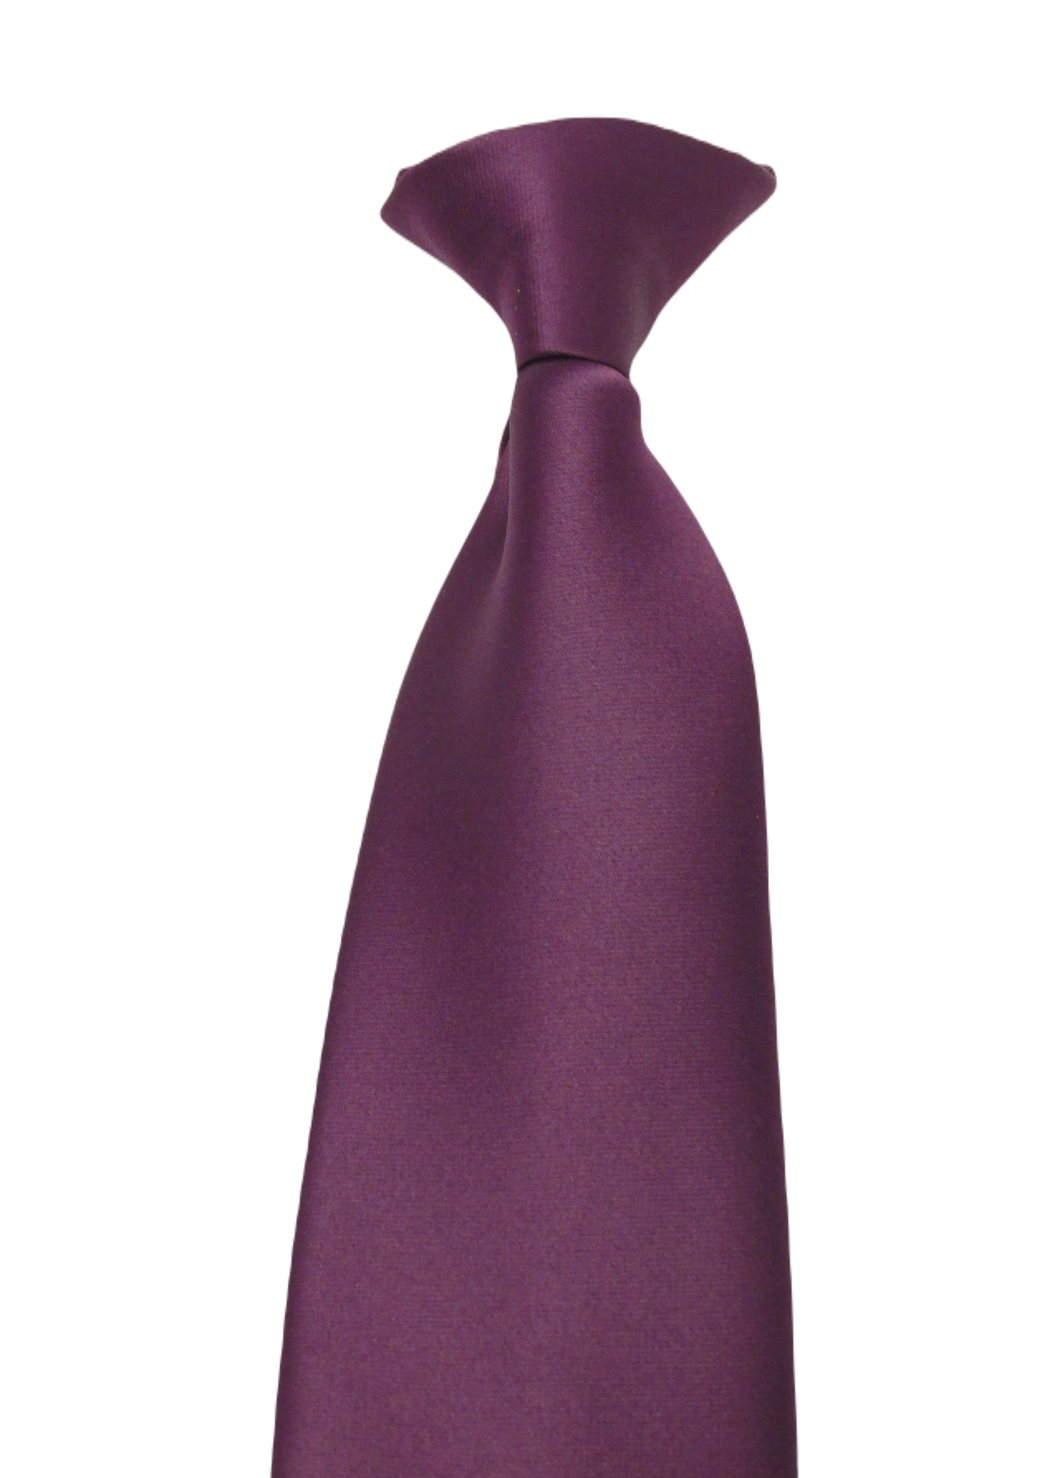 Purple Satin Clip on Tie by Van Buck